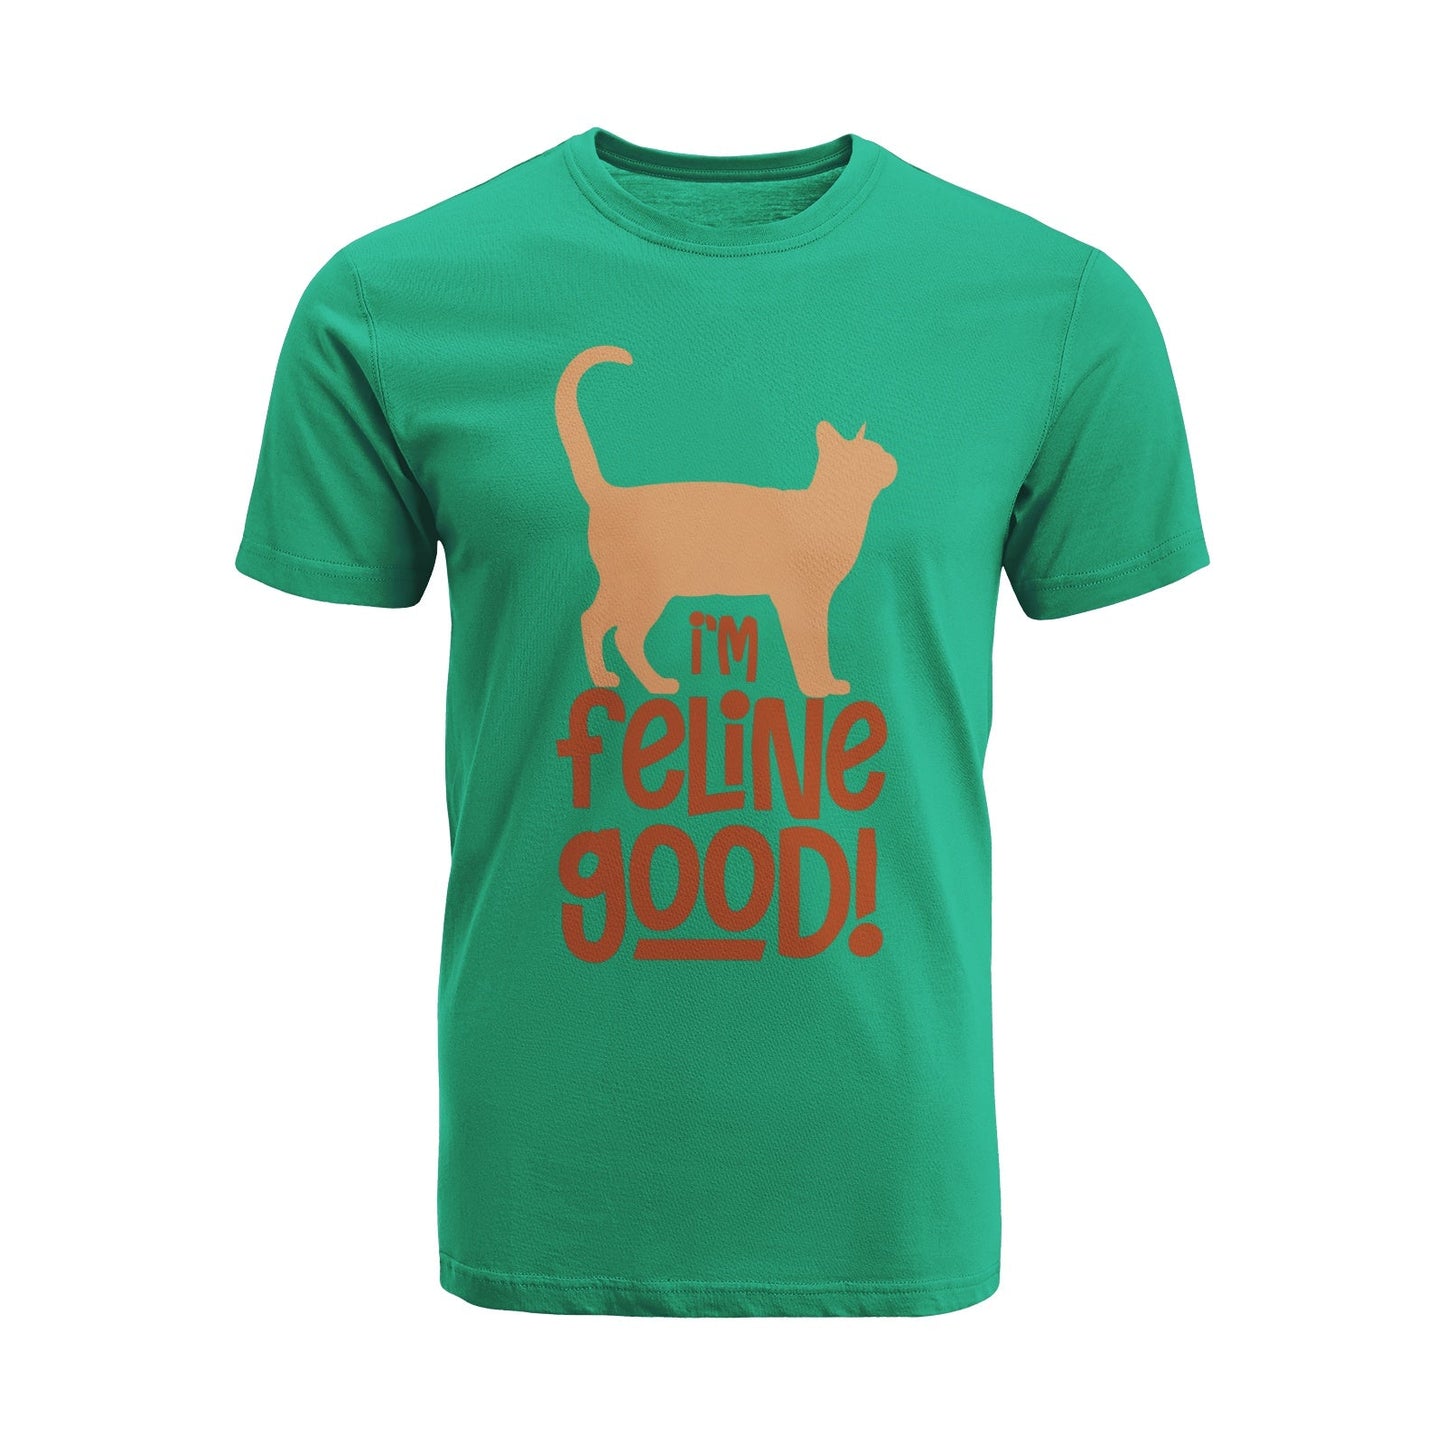 Unisex Short Sleeve Crew Neck Cotton Jersey T-Shirt CAT 50 - Tara-Outfits.com